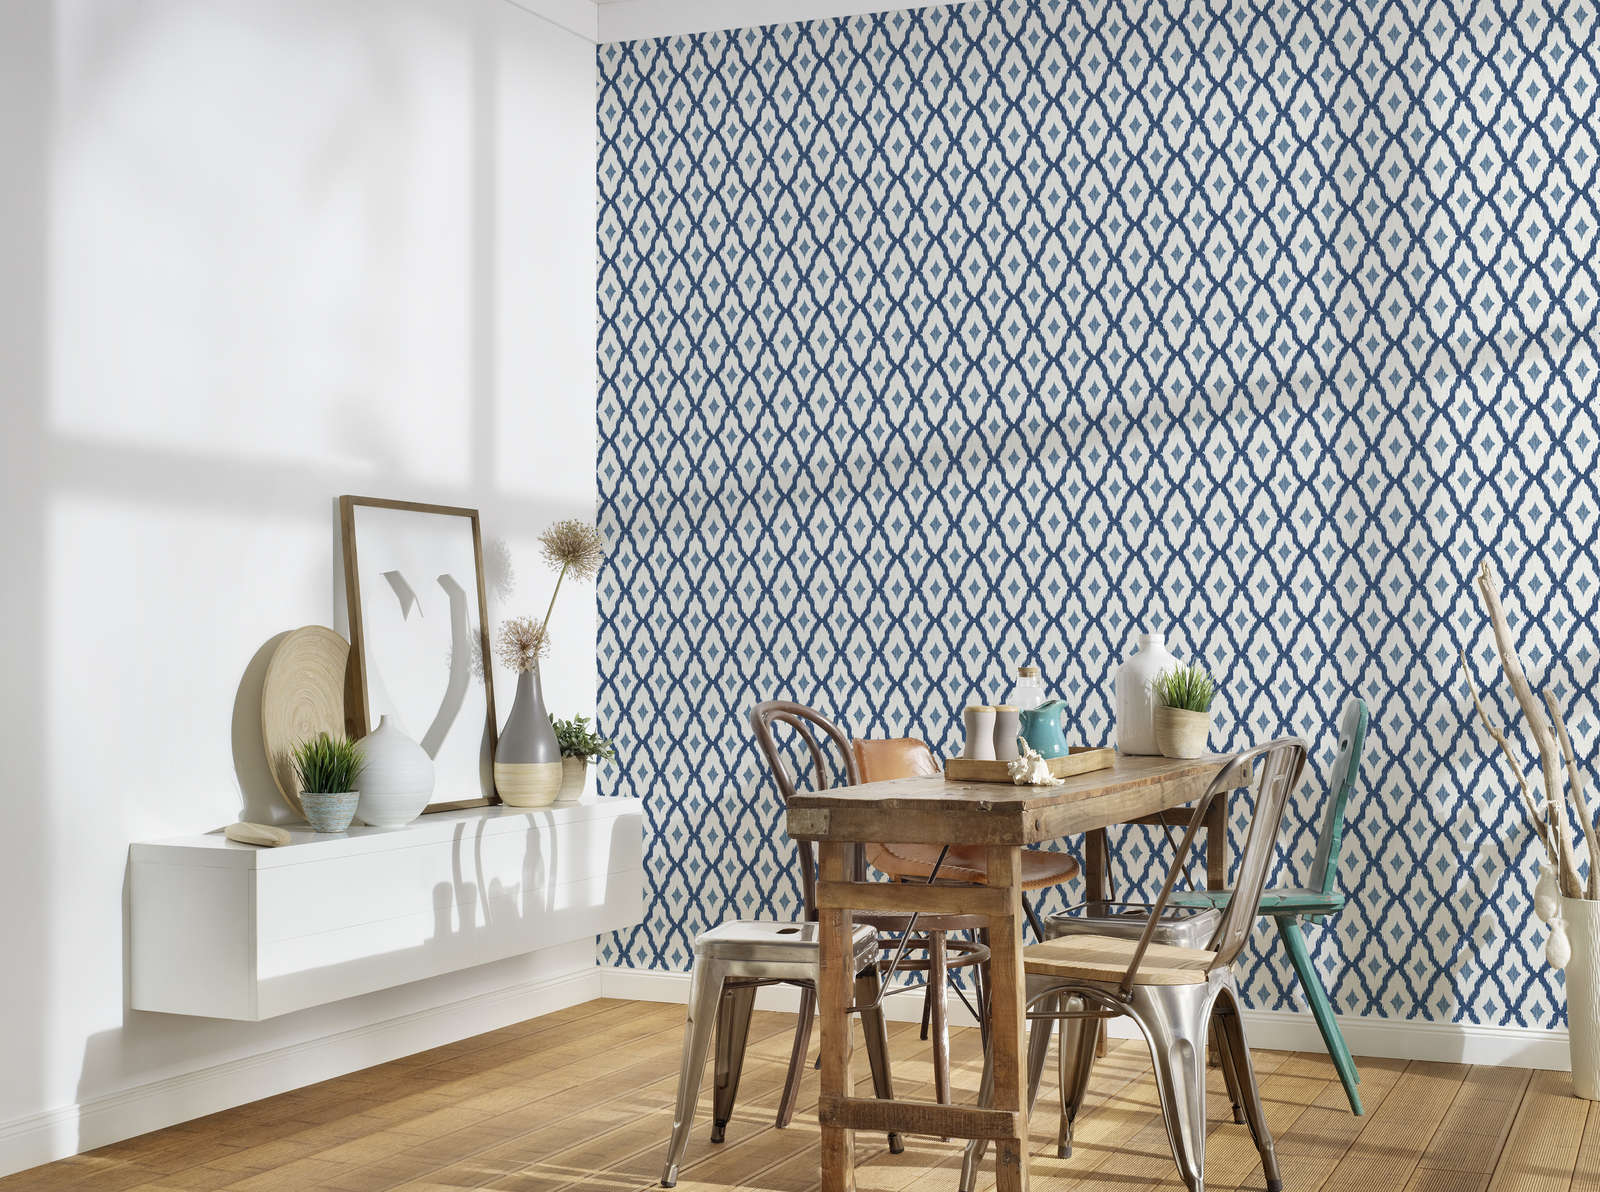             Non-woven wallpaper ikat pattern with diamonds motif - blue, white
        